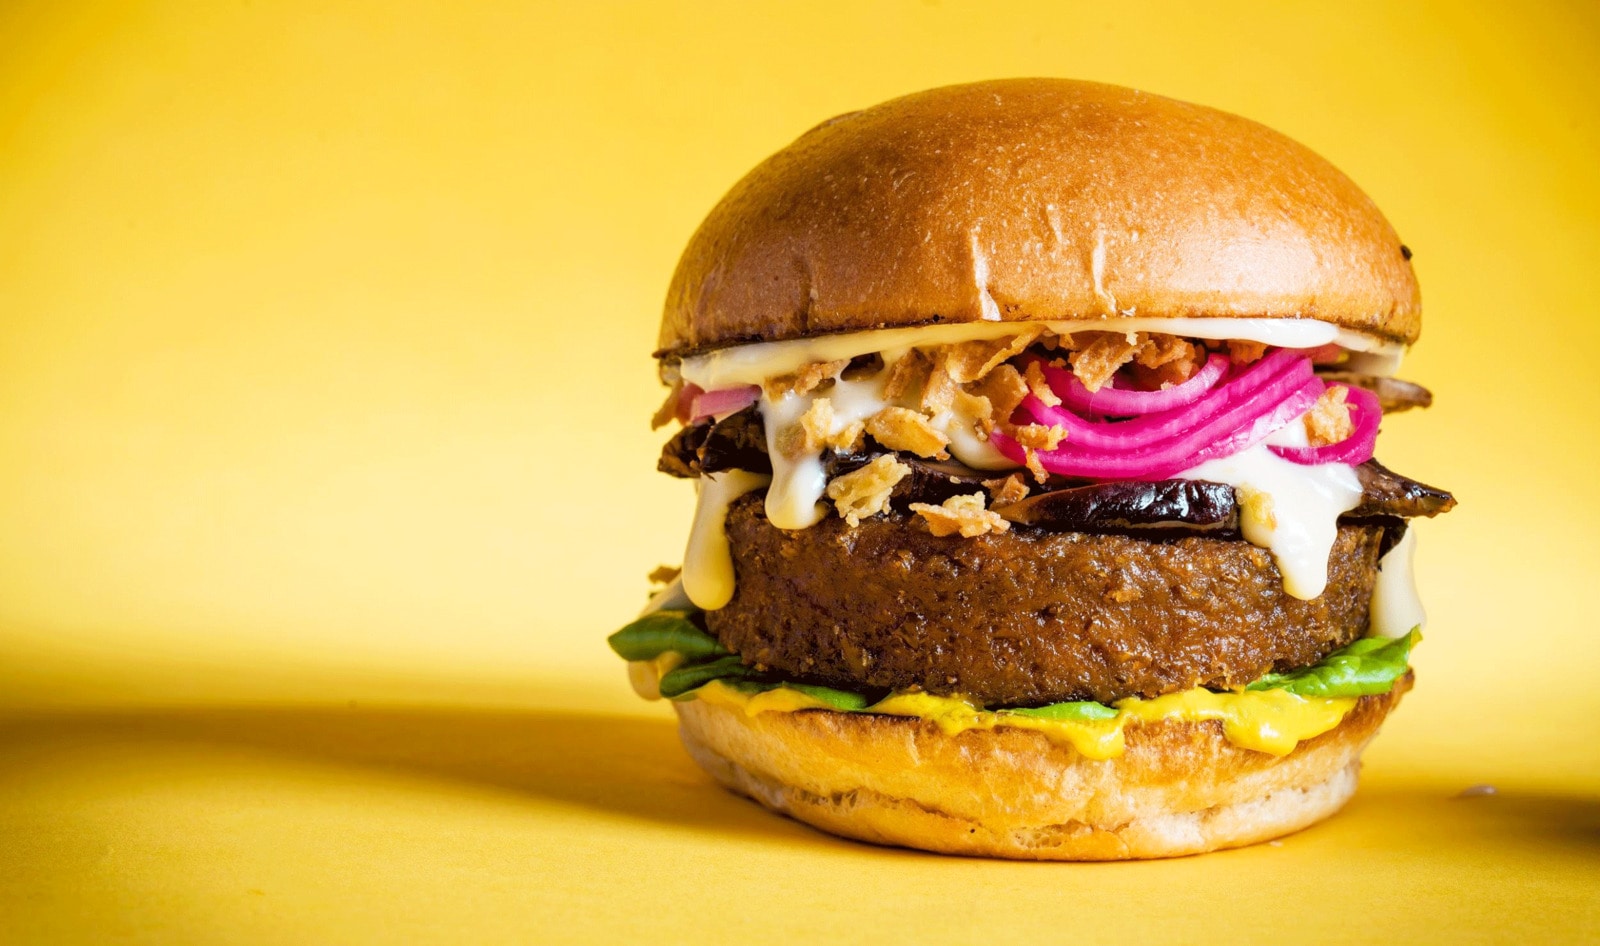 Popular UK Chain Byron Focuses Summer Menu on New Vegan Burgers